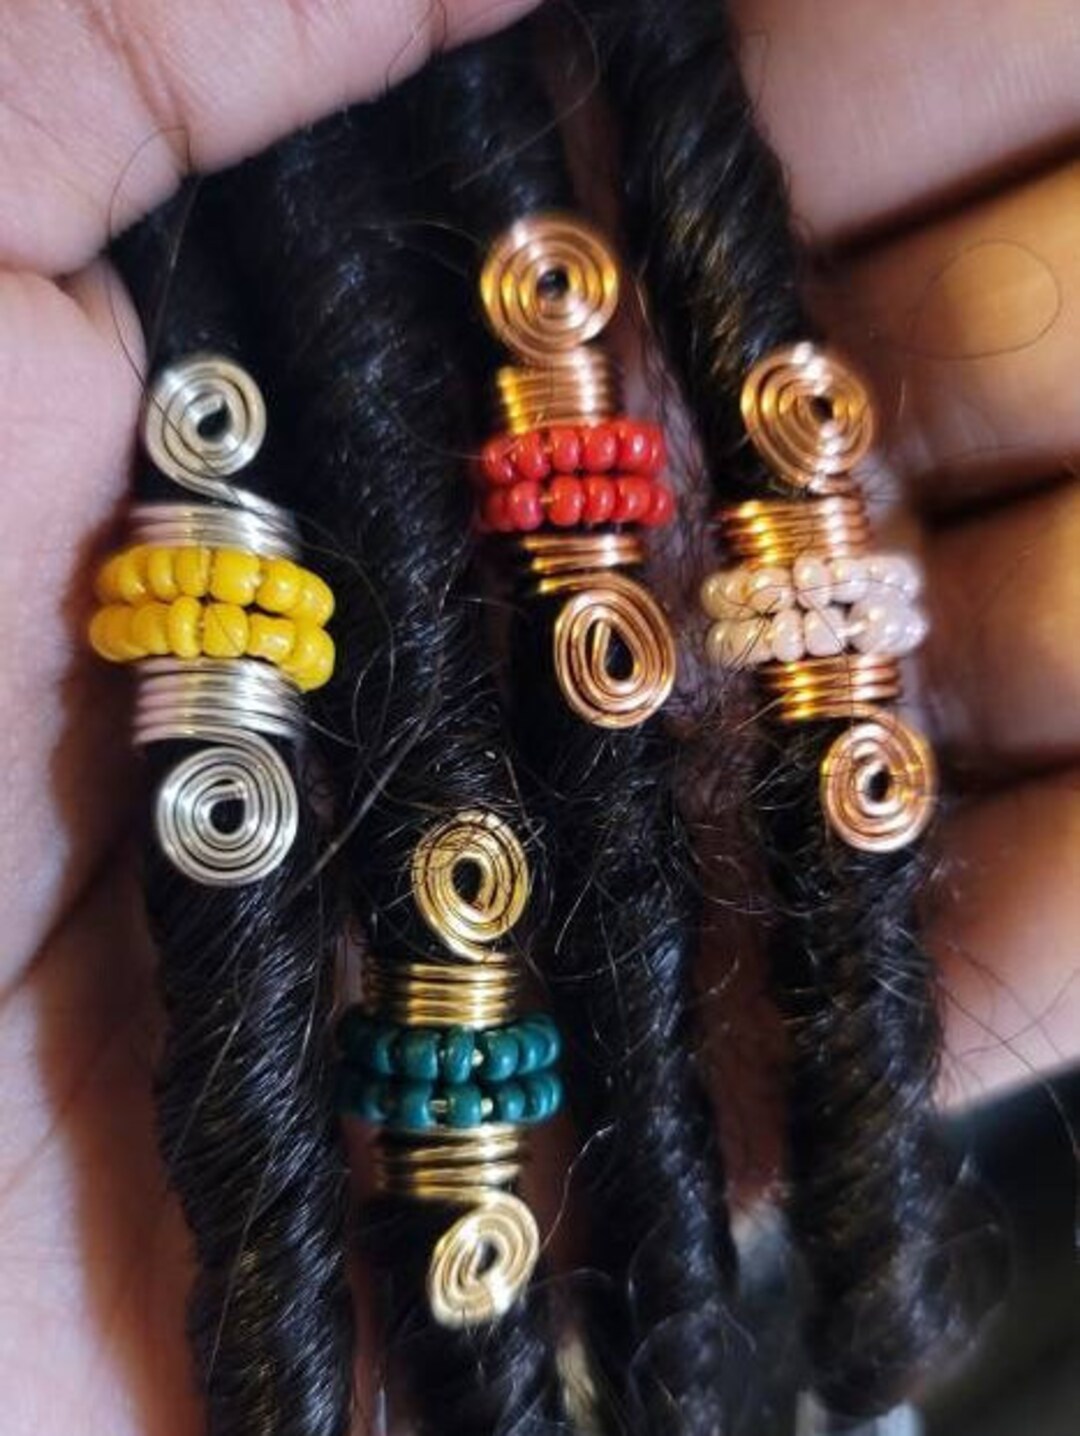 4 Piece Crystal Loc Jewelry Set. Dreadlock Hair Ring Accessories